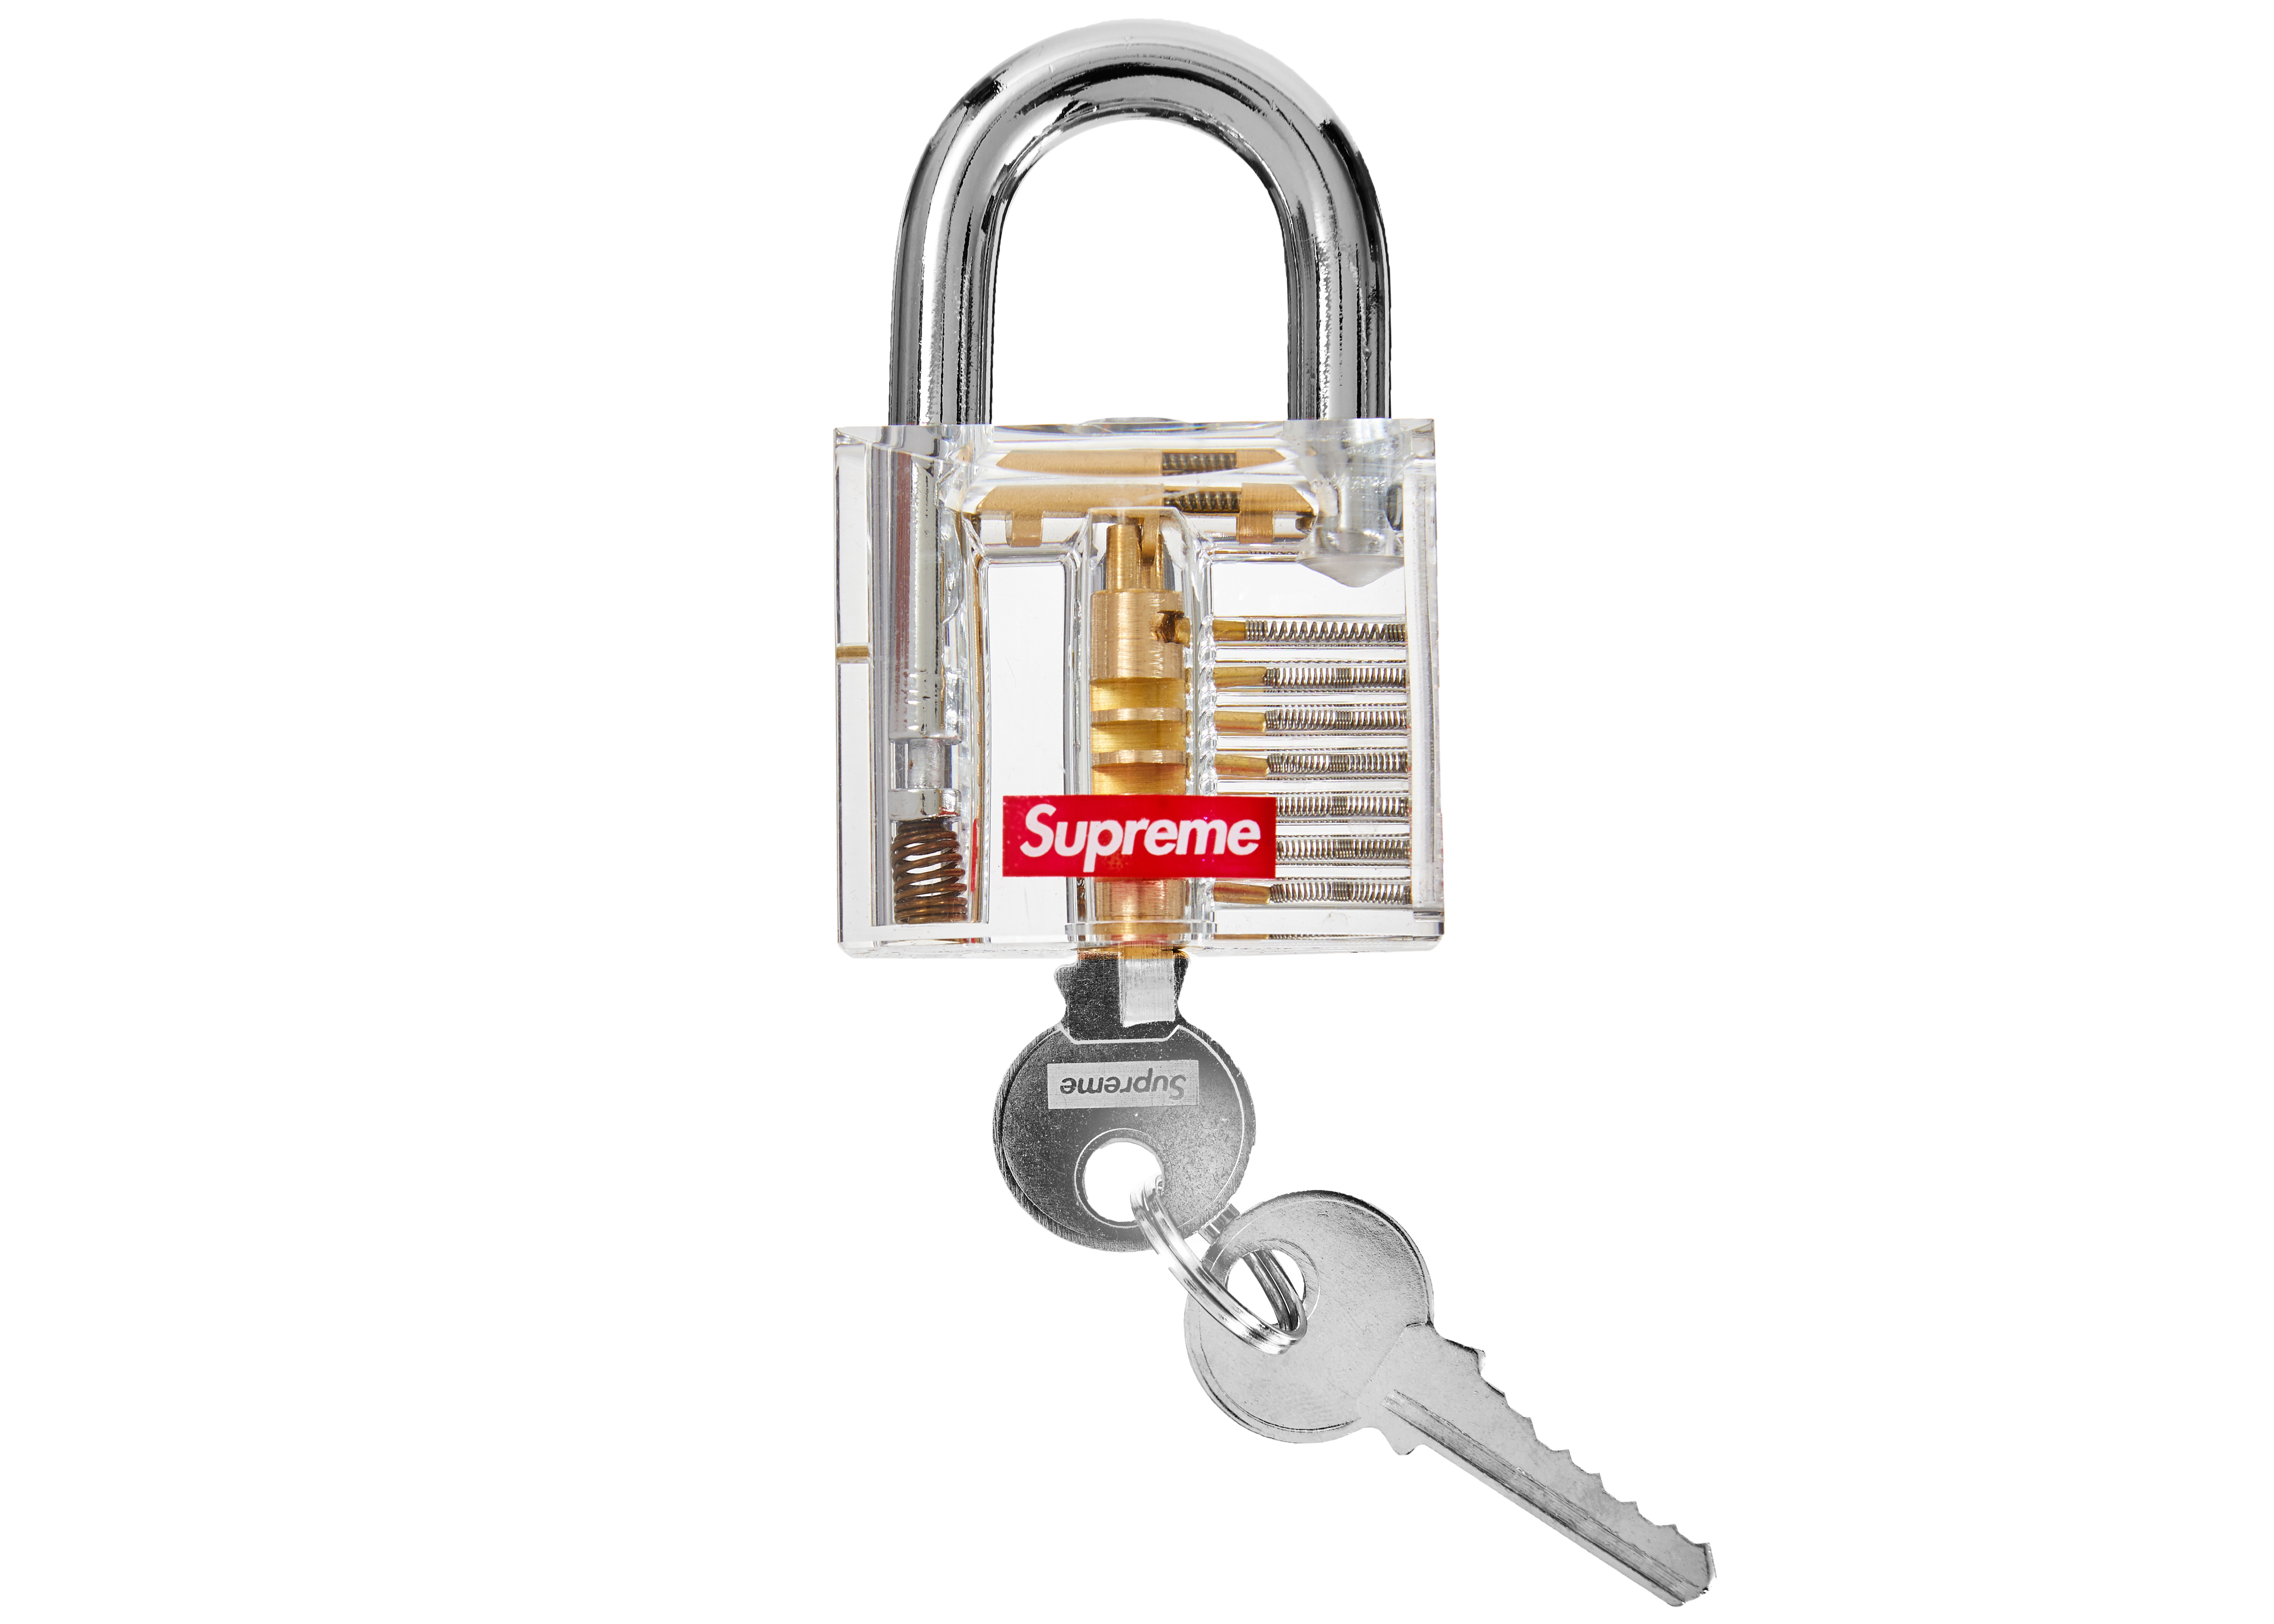 Supreme Kryptonite Integrated Chain Lock